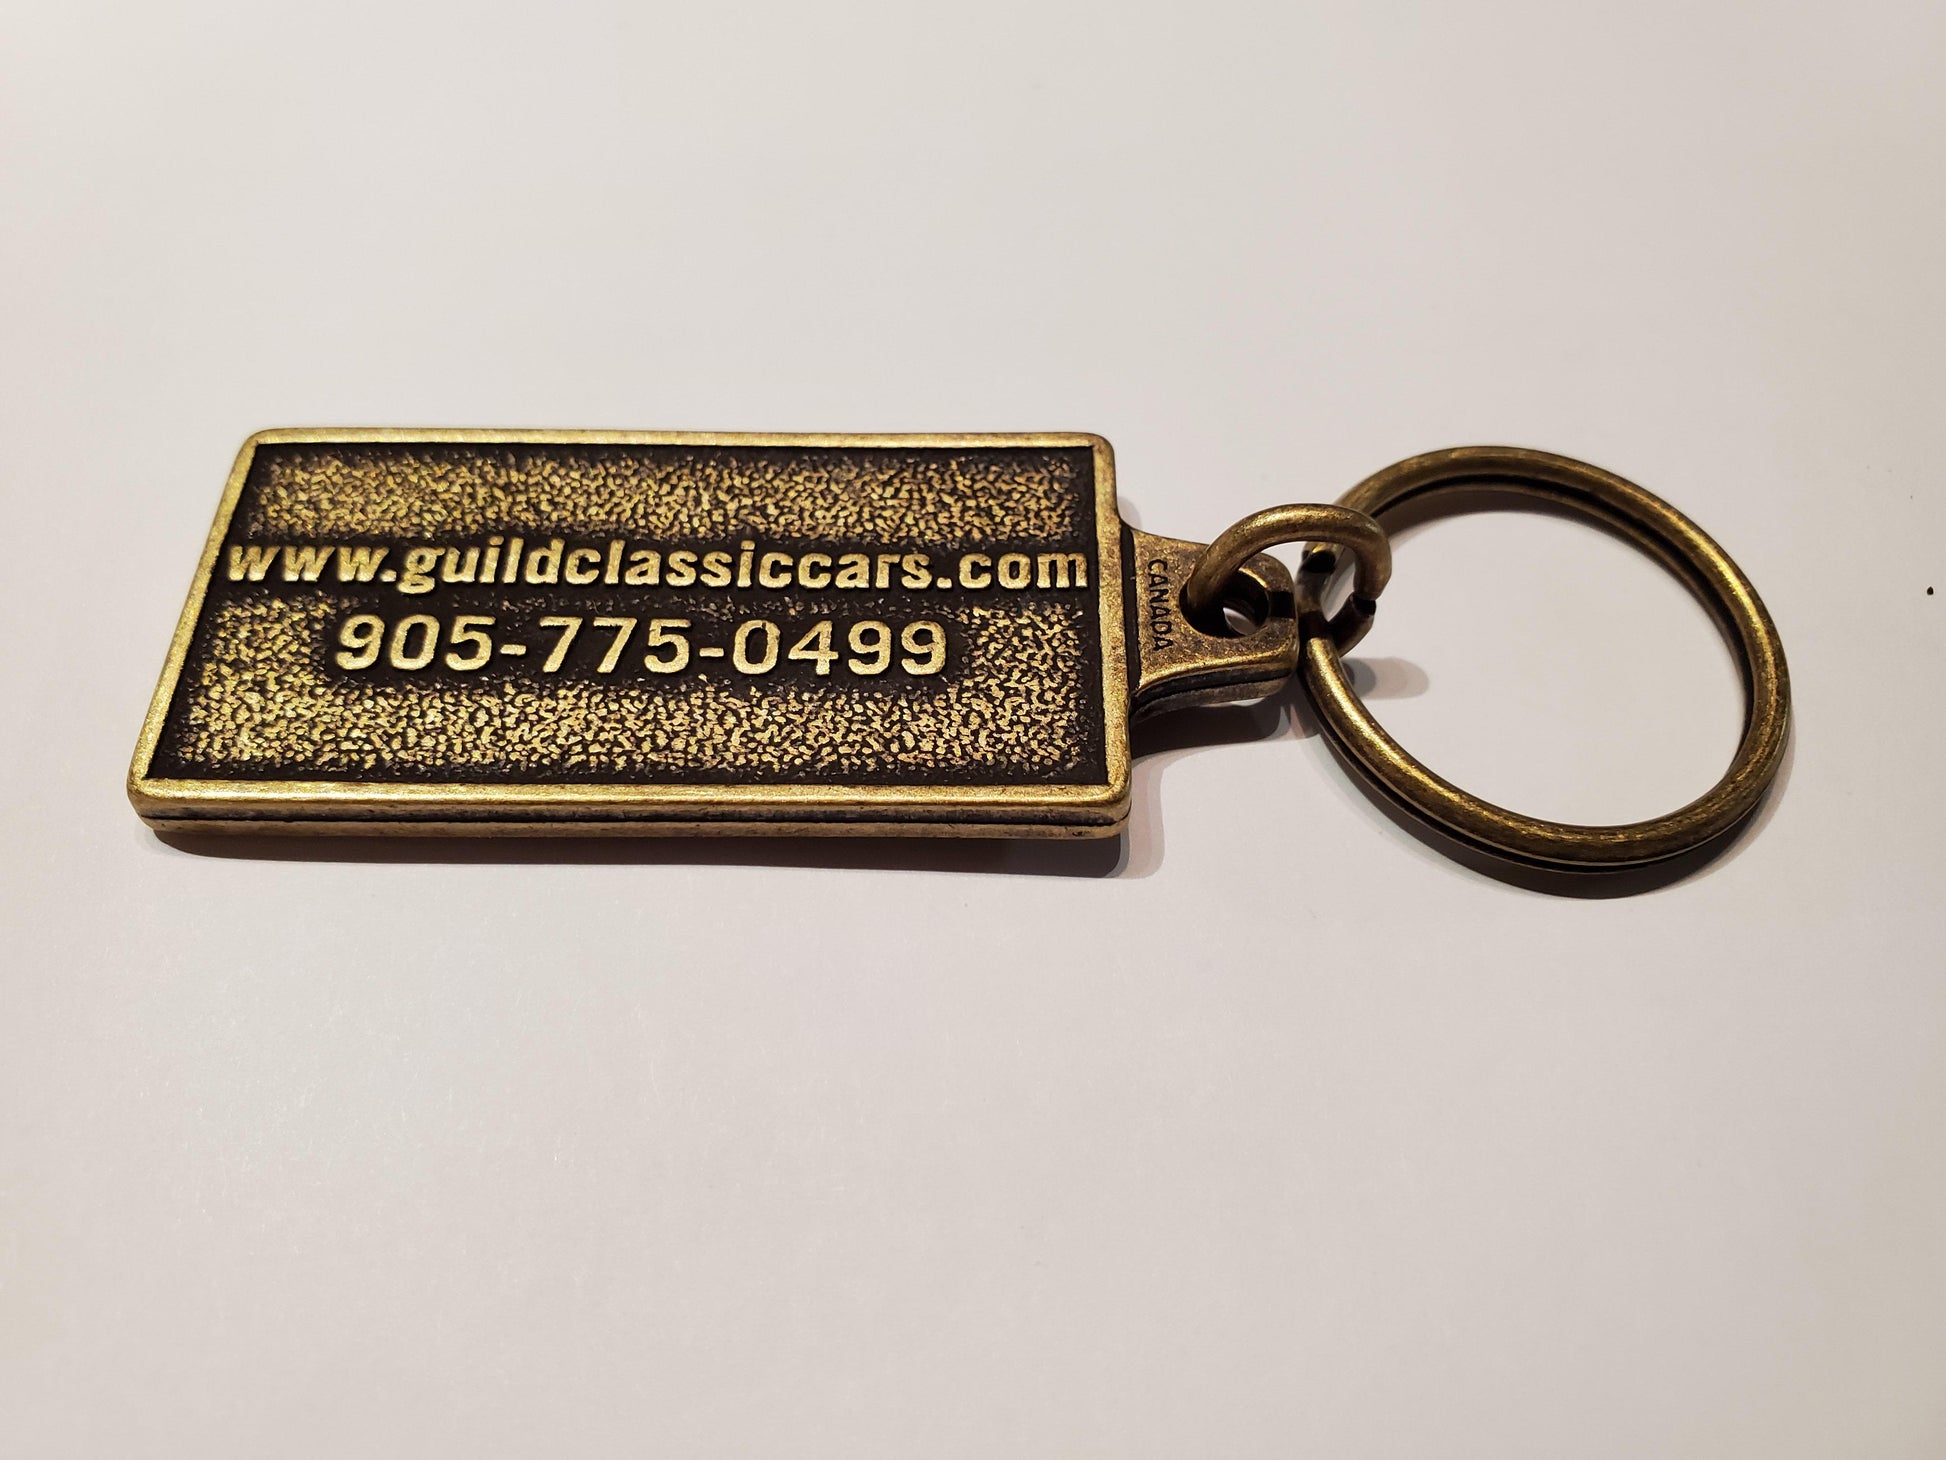 Guild Logo Antique Brass Key Chain – The Guild of Automotive Restorers -  Home of Restoration Garage